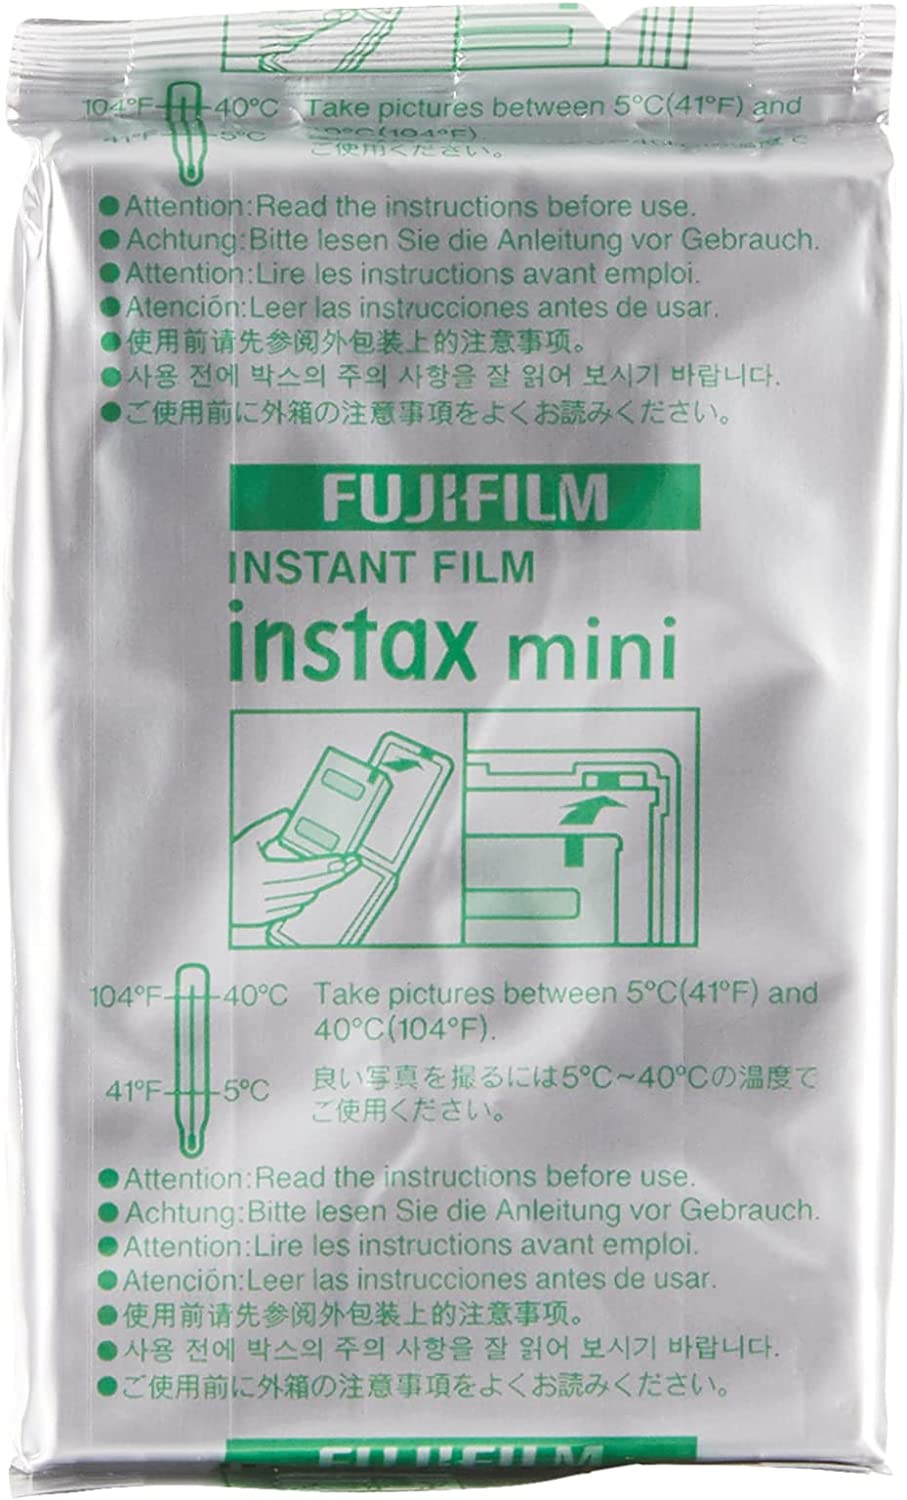 Fujifilm Instax Mini Instant Film (8 Twin Packs, 160 Total) for Instax Cameras